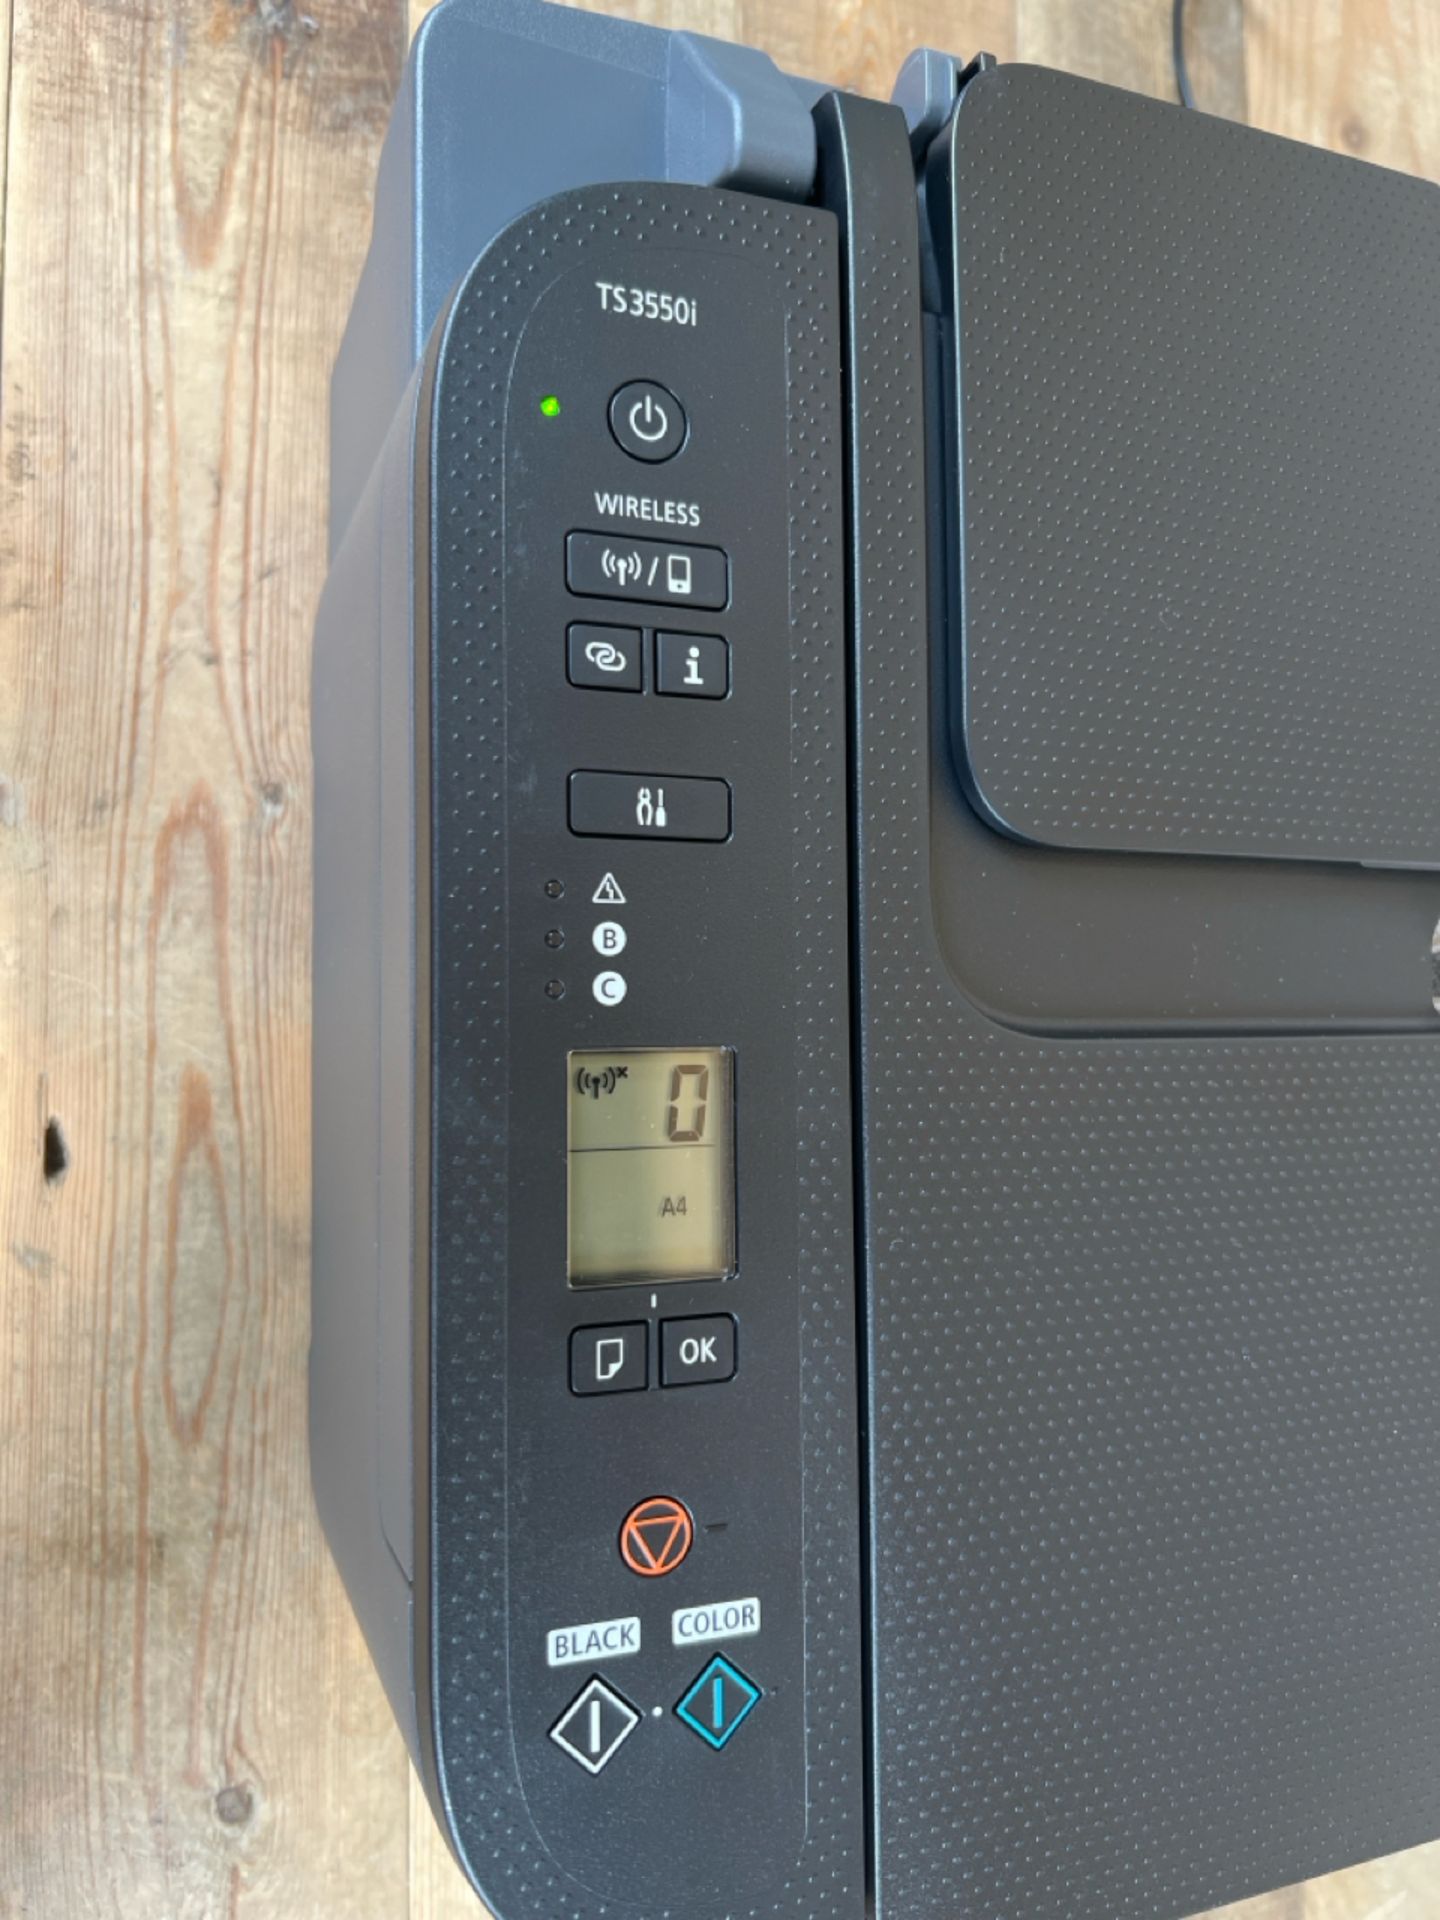 Canon PIXMA TS3550i Wireless Printer Wi-Fi - Image 6 of 6